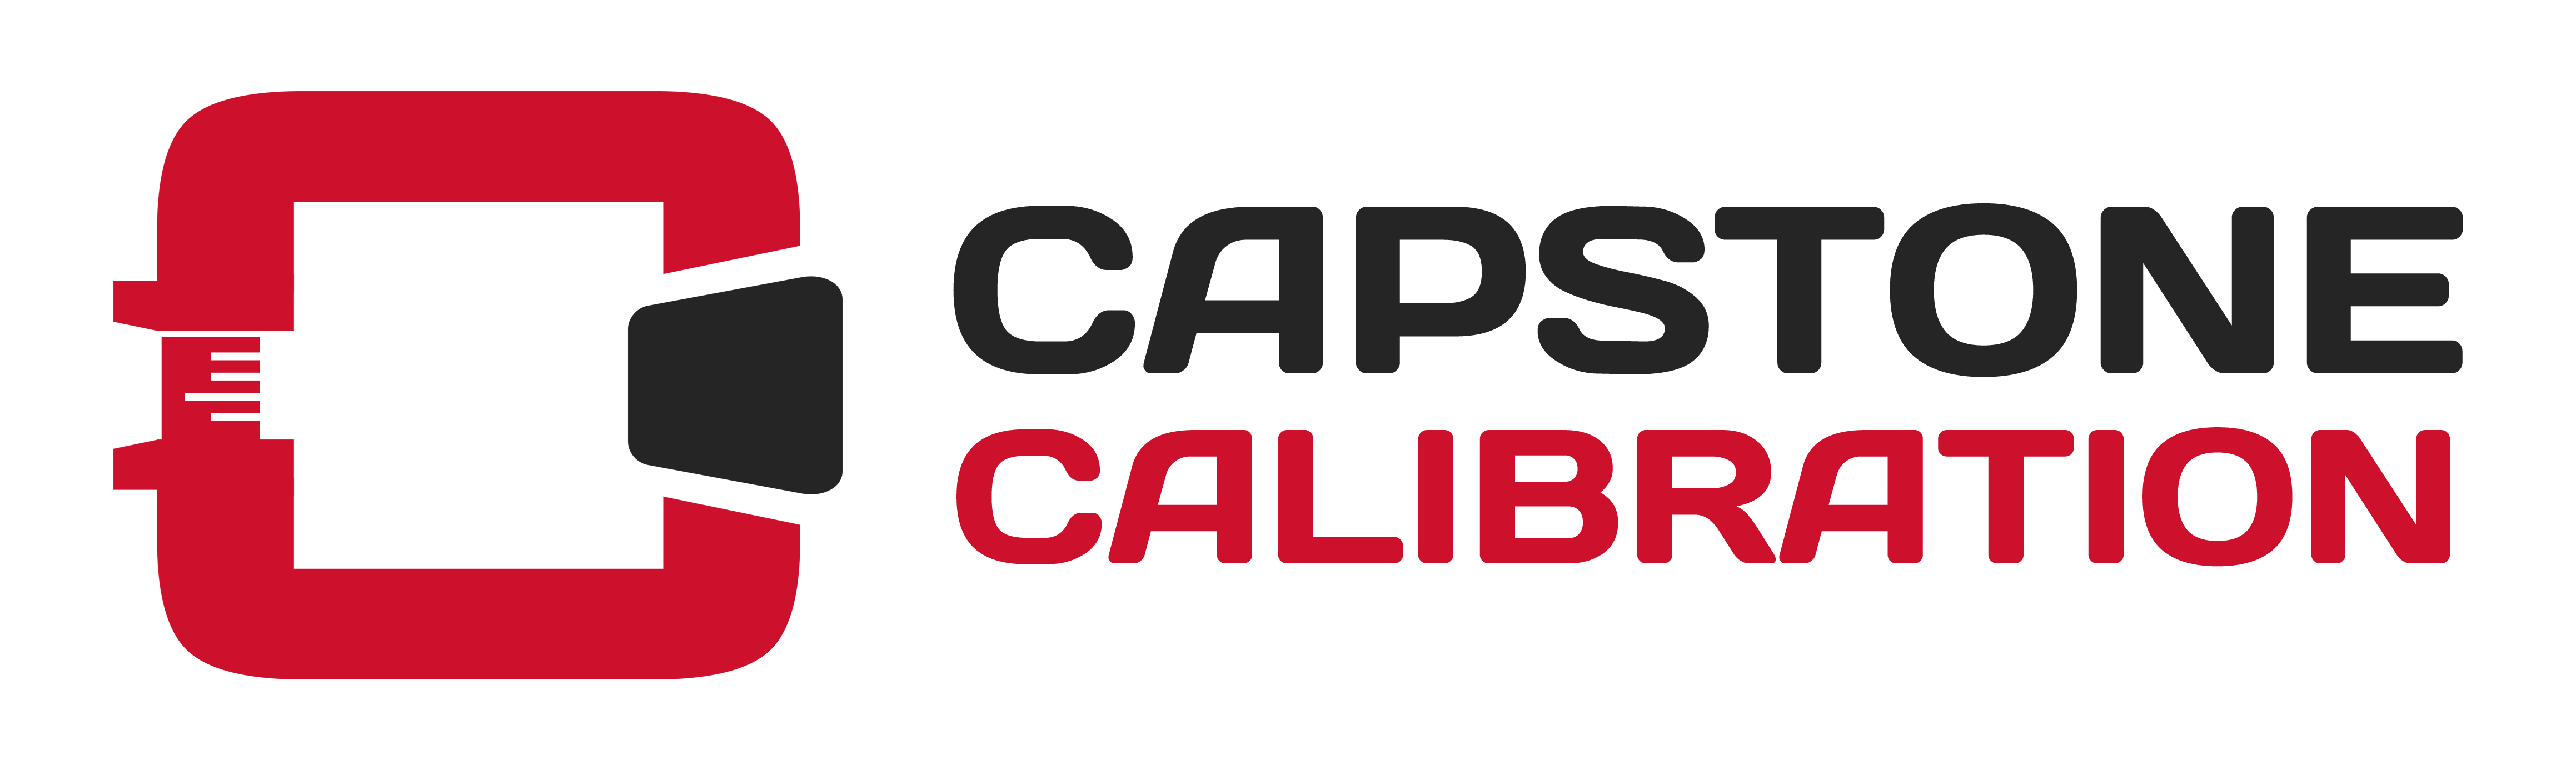 Capstone Calibration